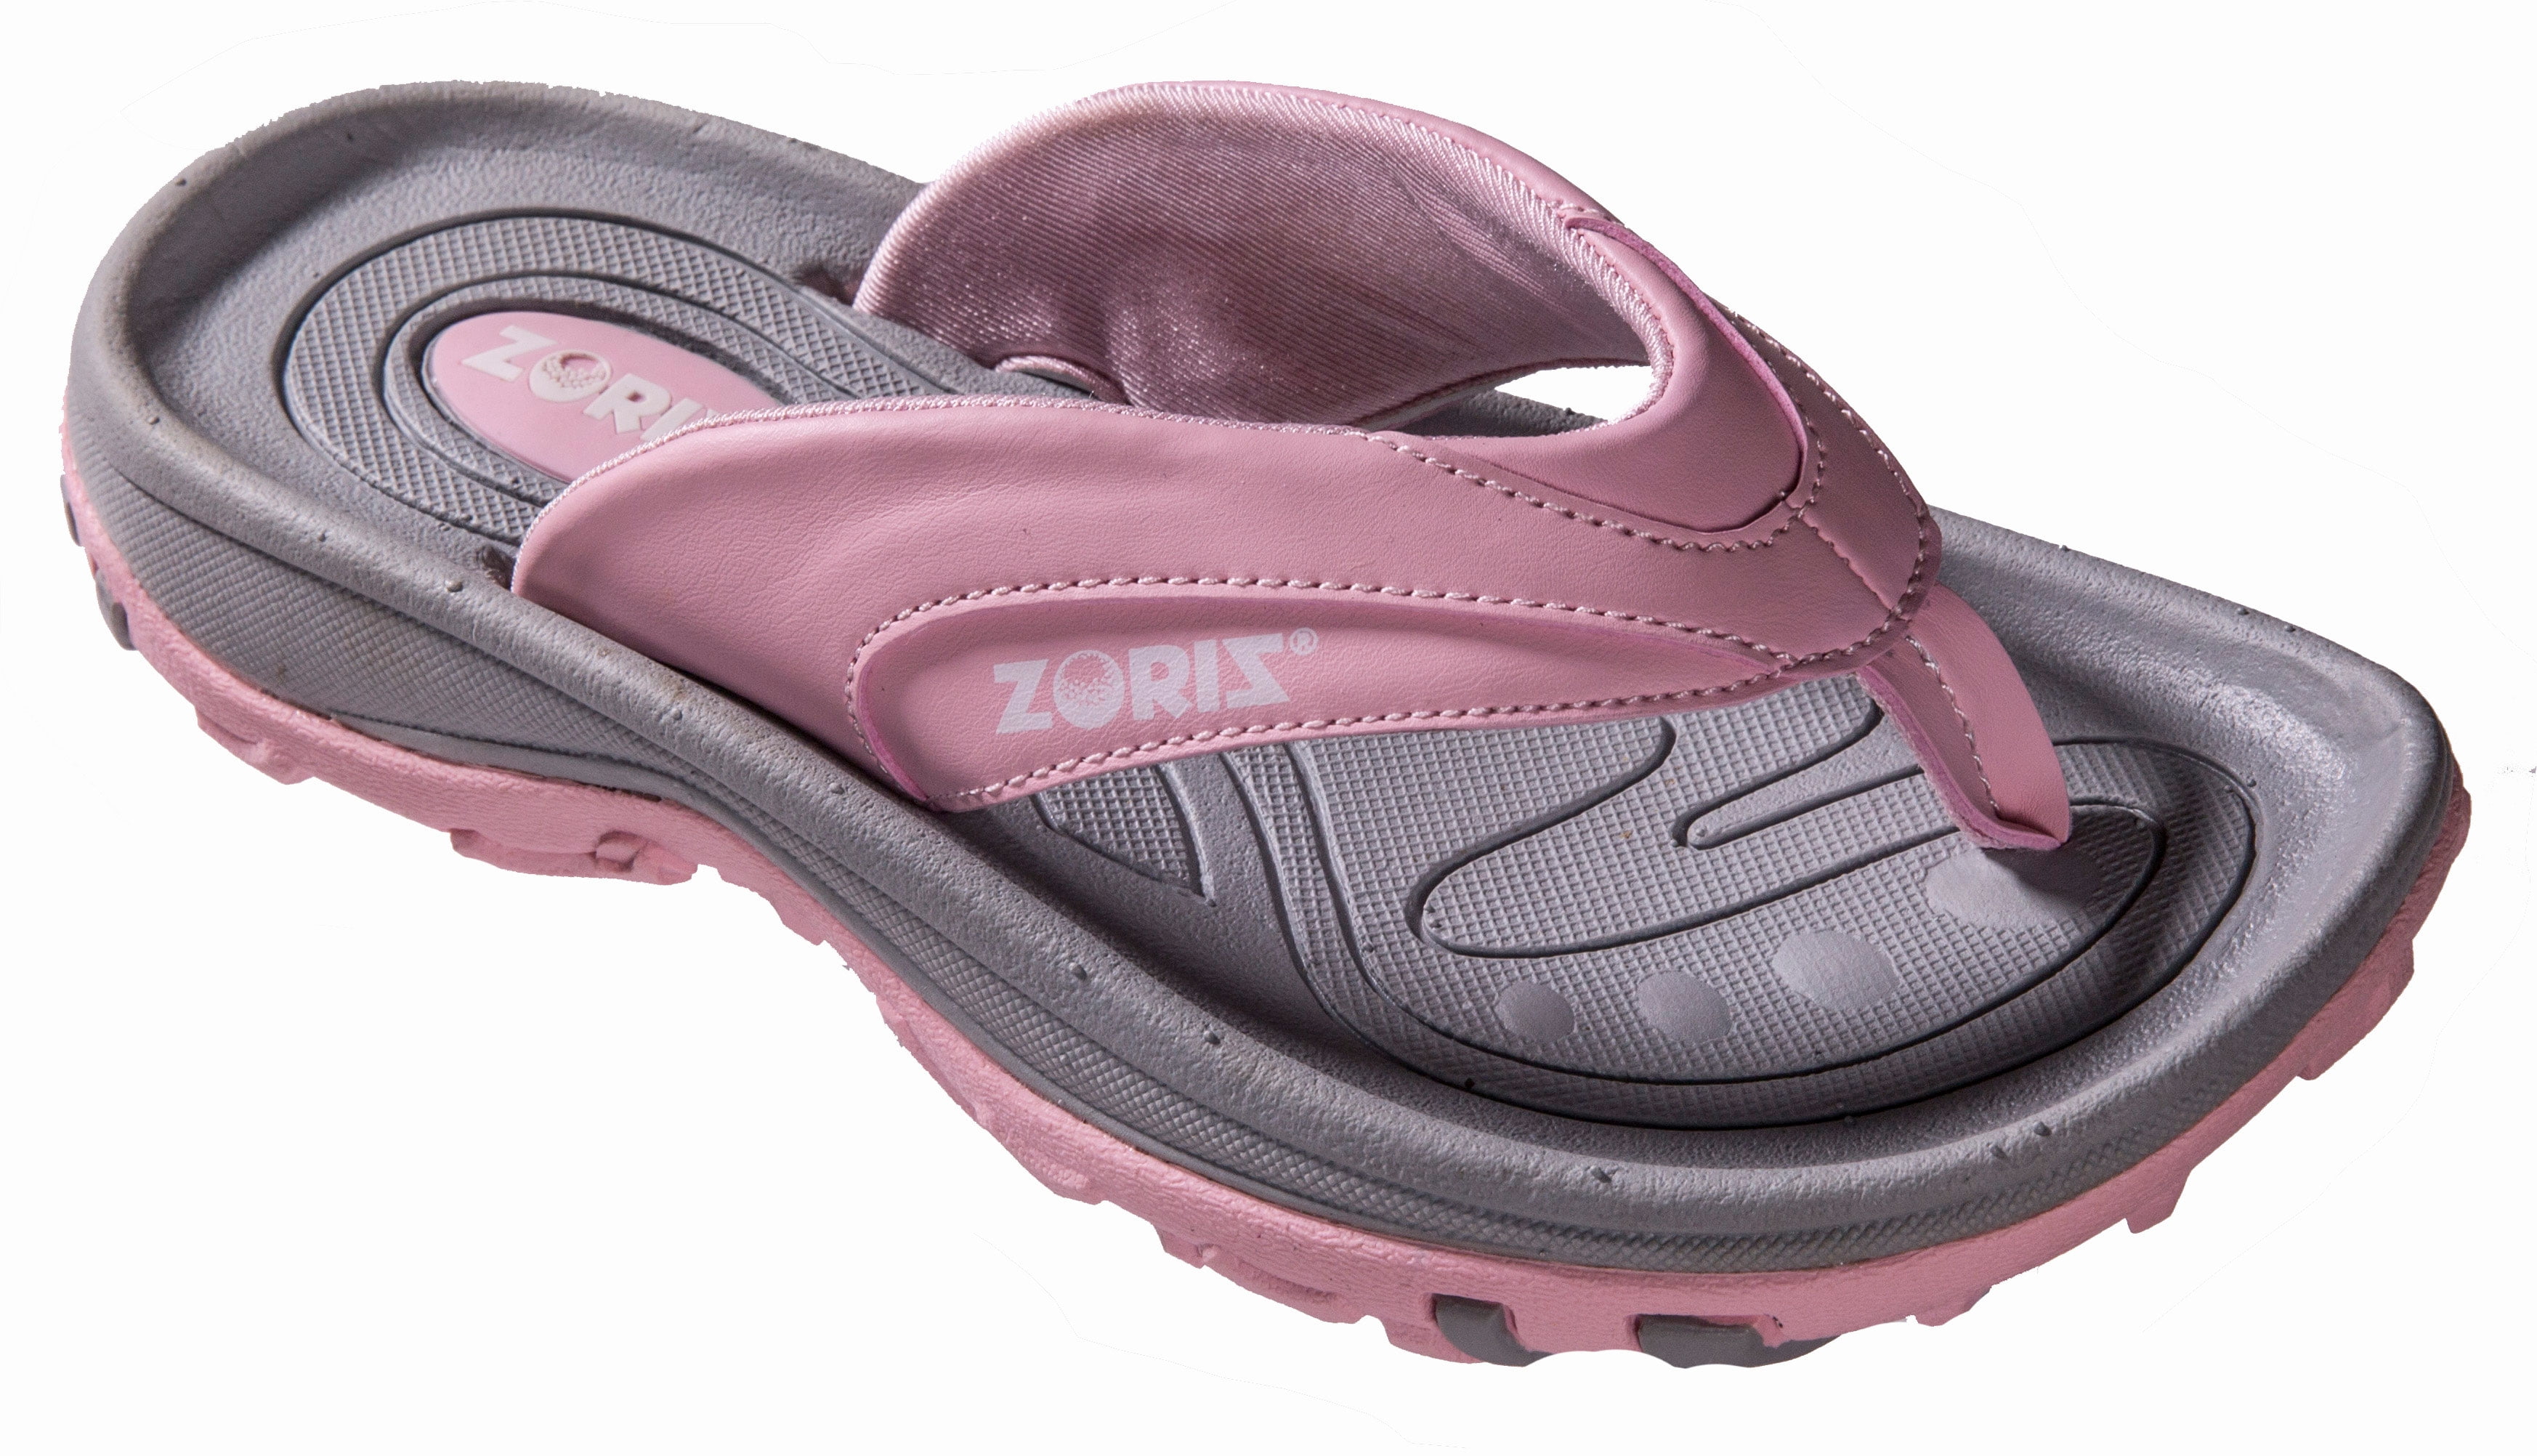 Zoriz Golf Sandals (Spiked) - Walmart.com